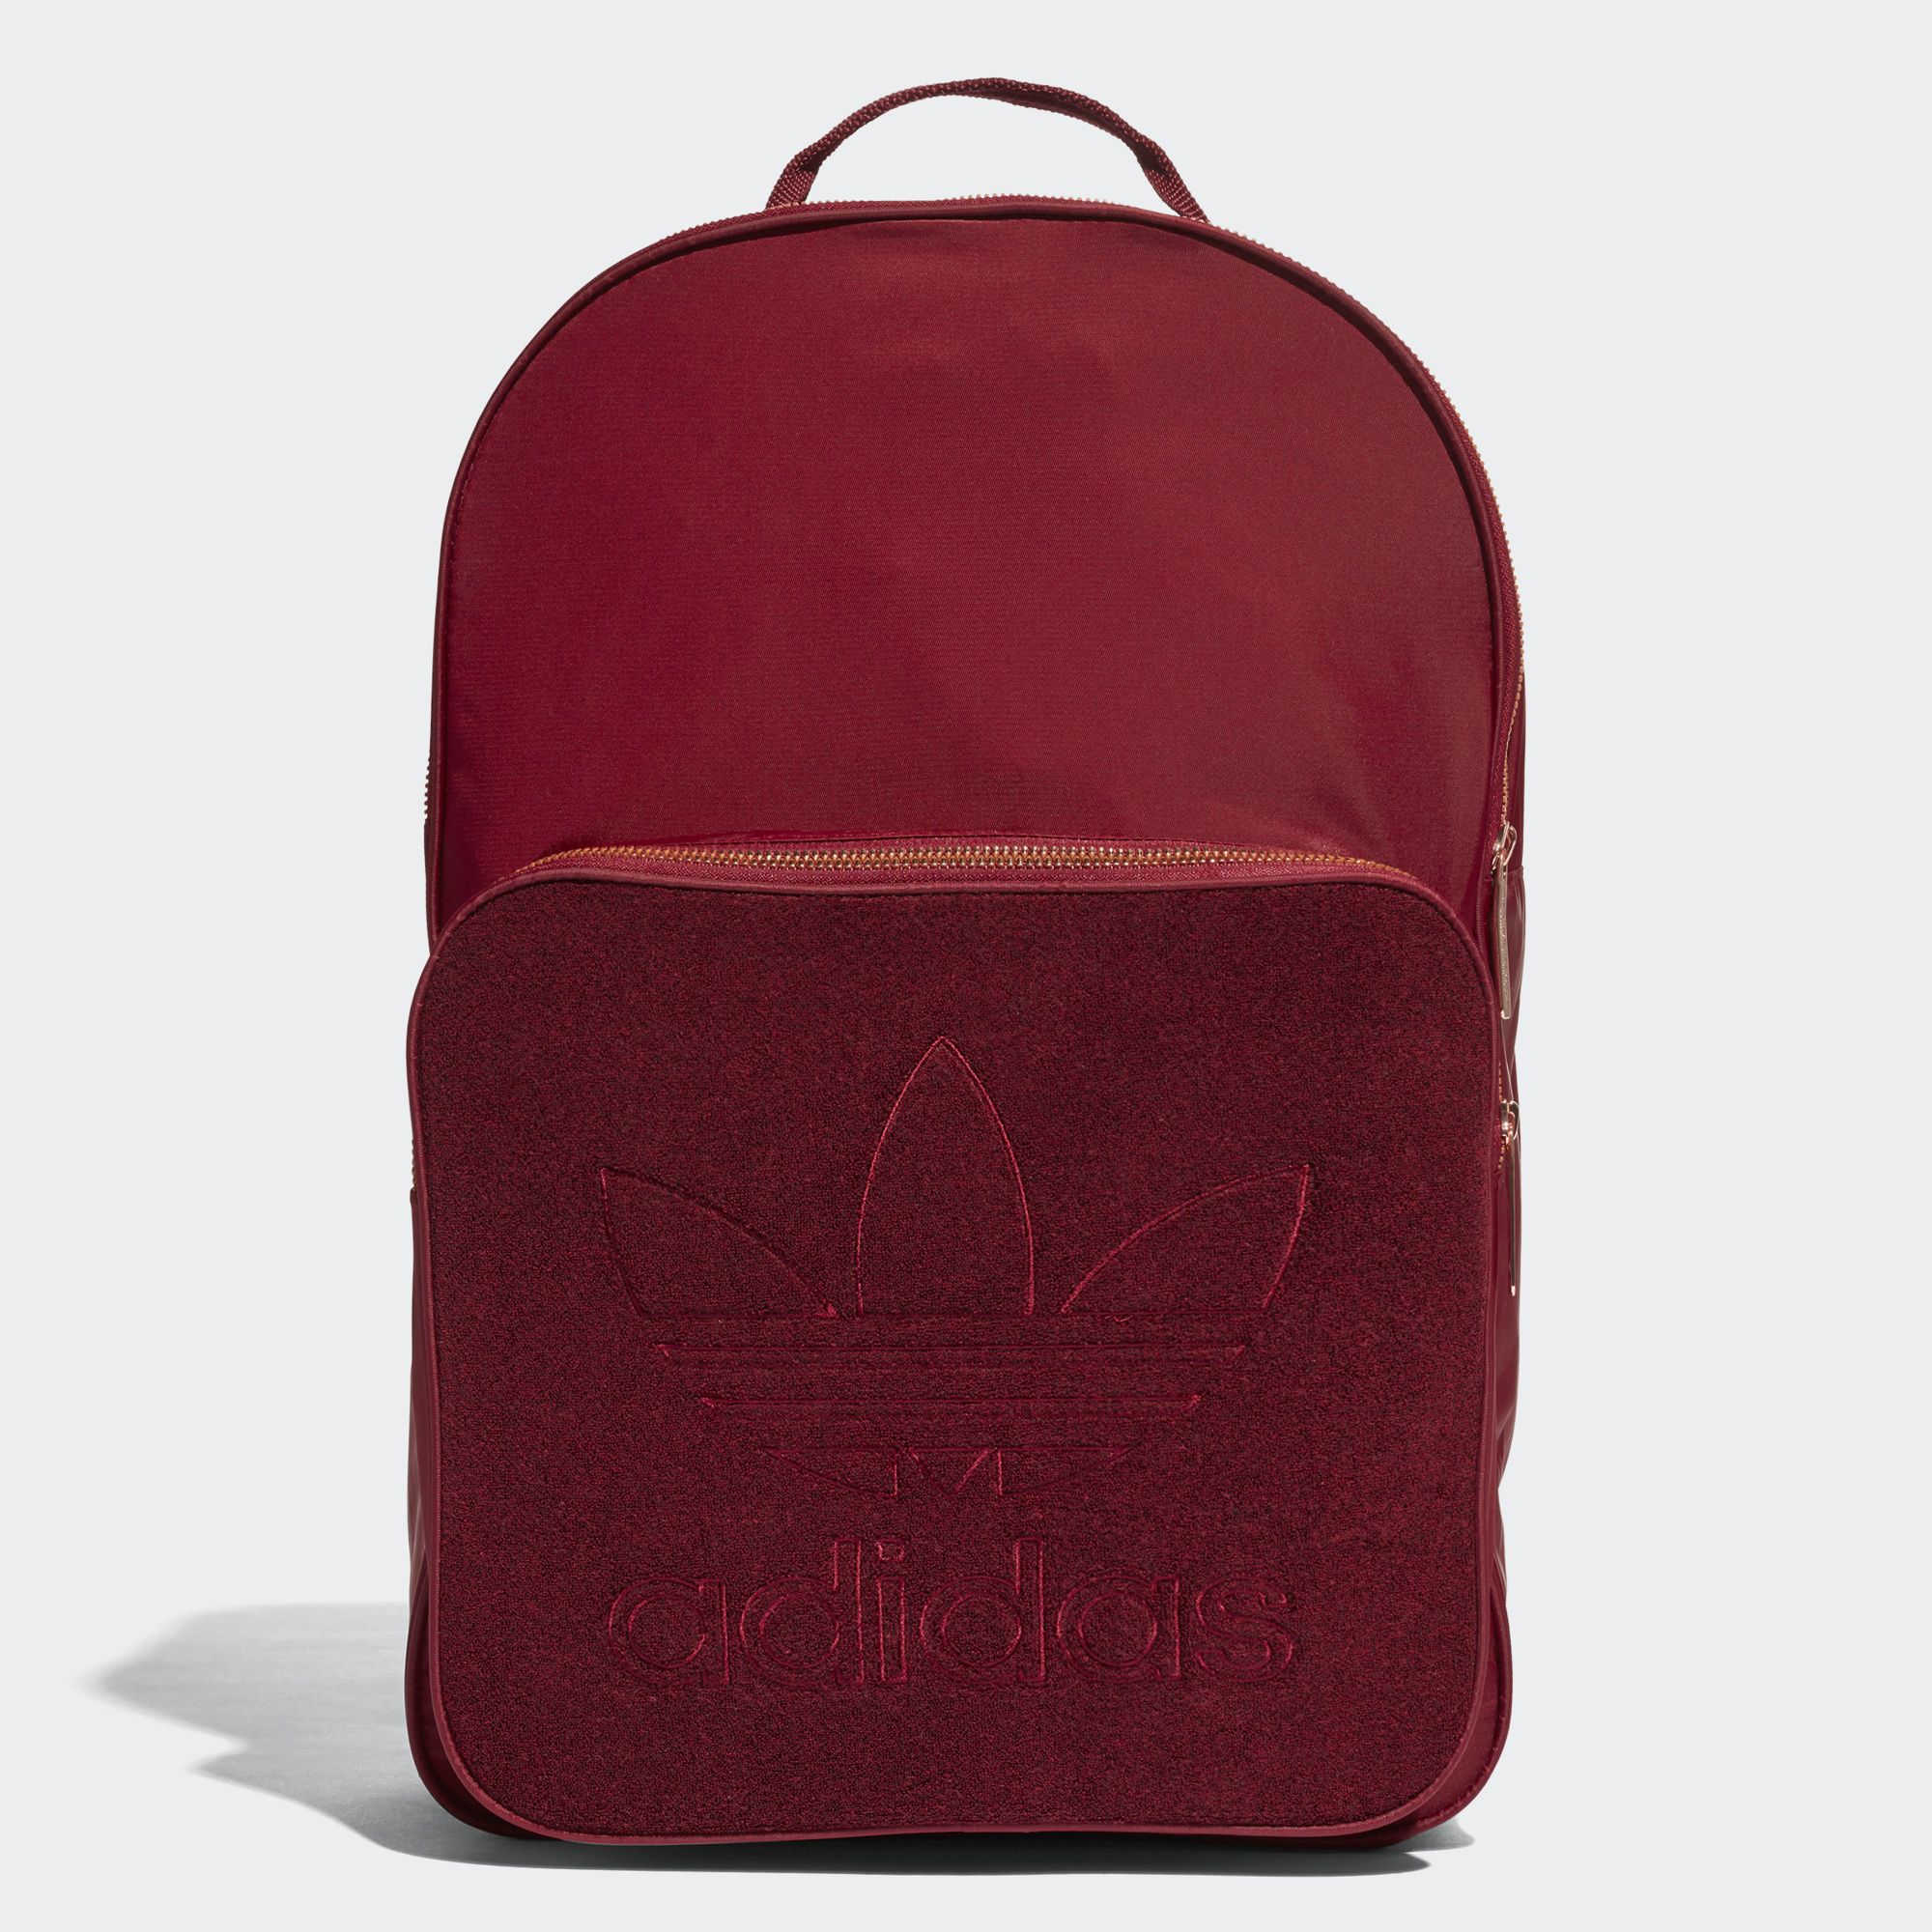 burgundy adidas backpack